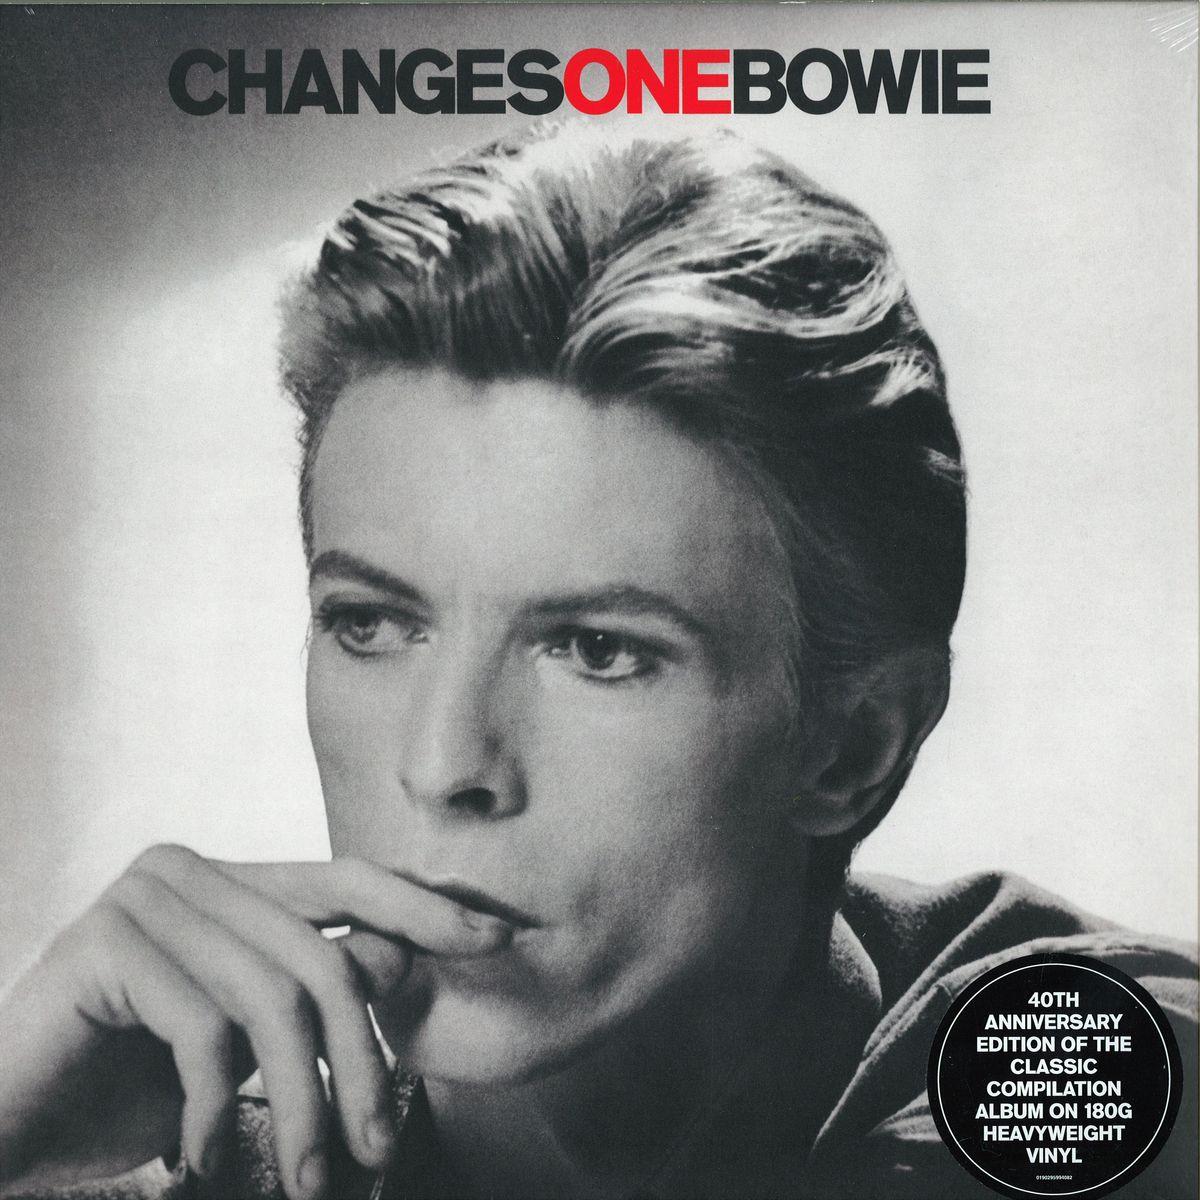 David Bowie - Changesonebowie (1976) LP